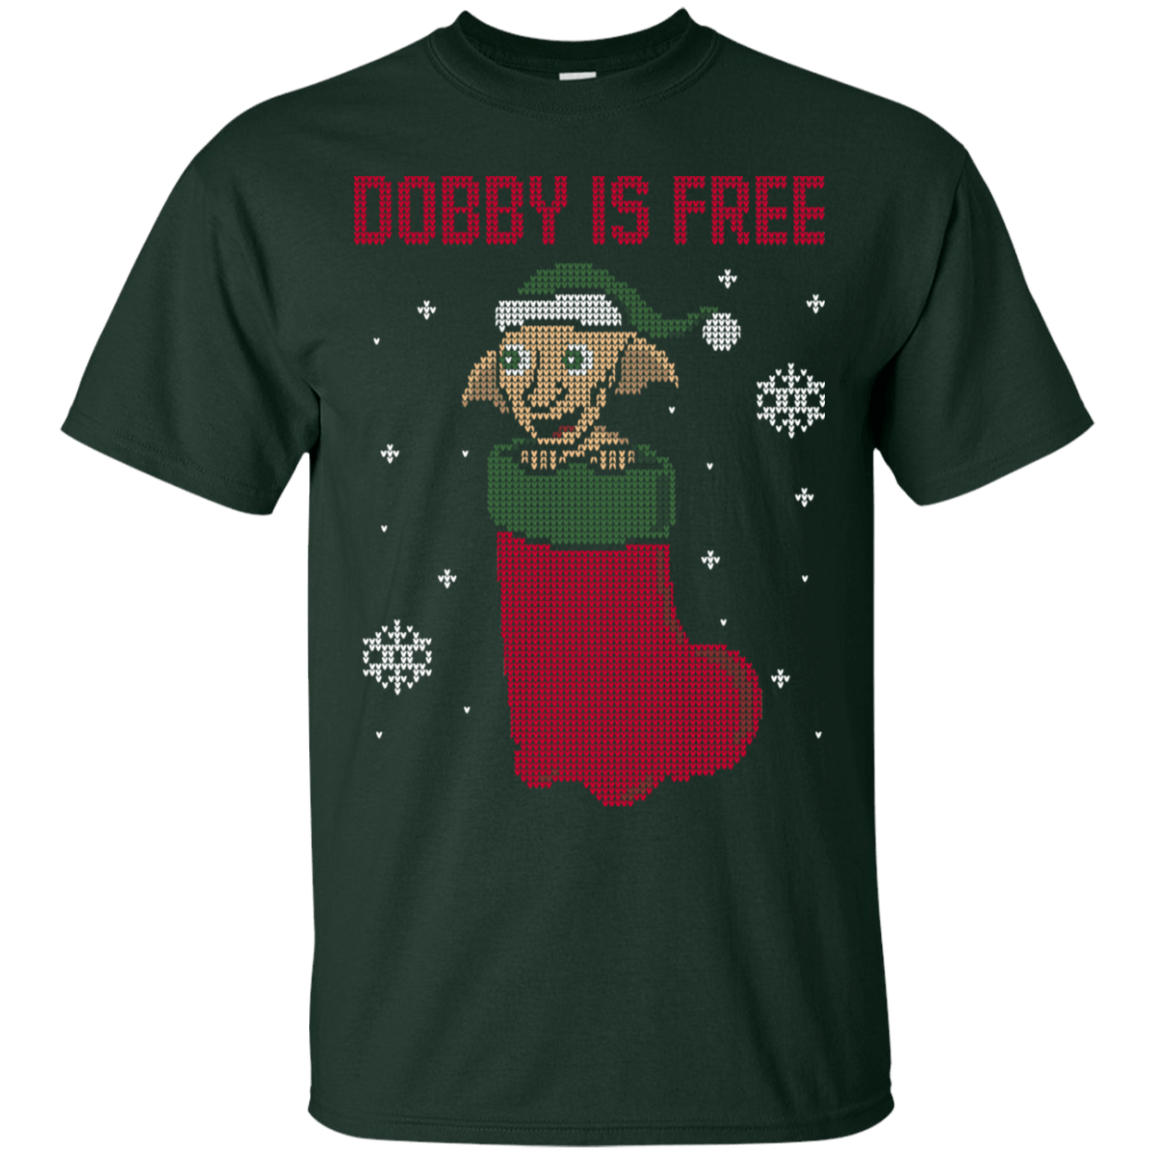 T-Shirts Free Elf! T-Shirt